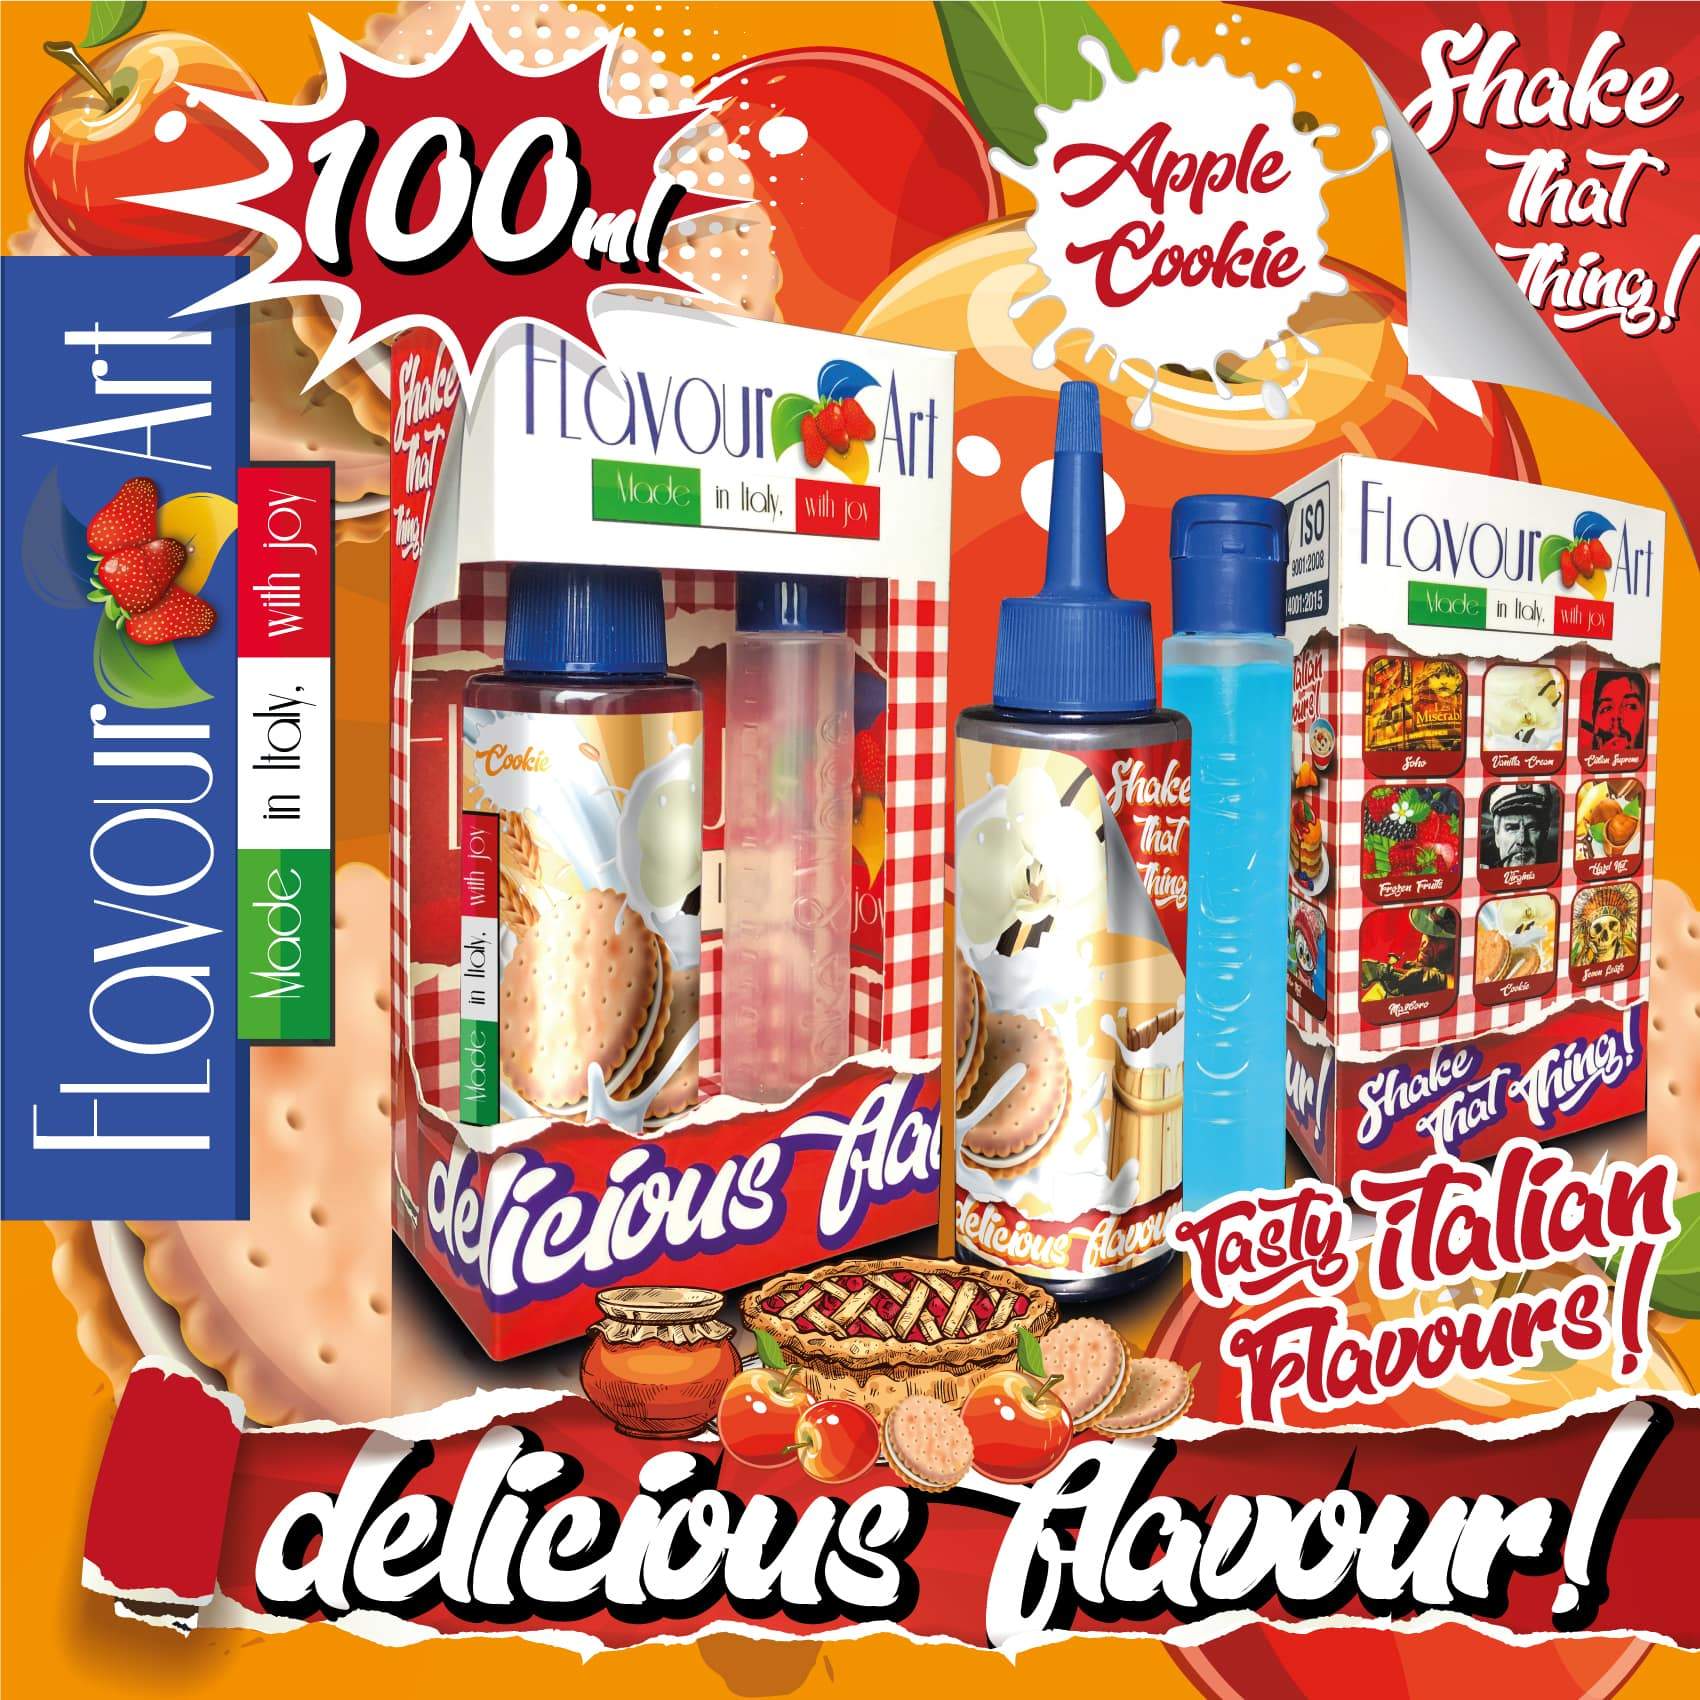 apple-cookie-flavourart-mix-shake-n-vape-_-_-DIY-_-_-booster-_-flavor-flavorart-100ml_1024x1024@2x.jpg